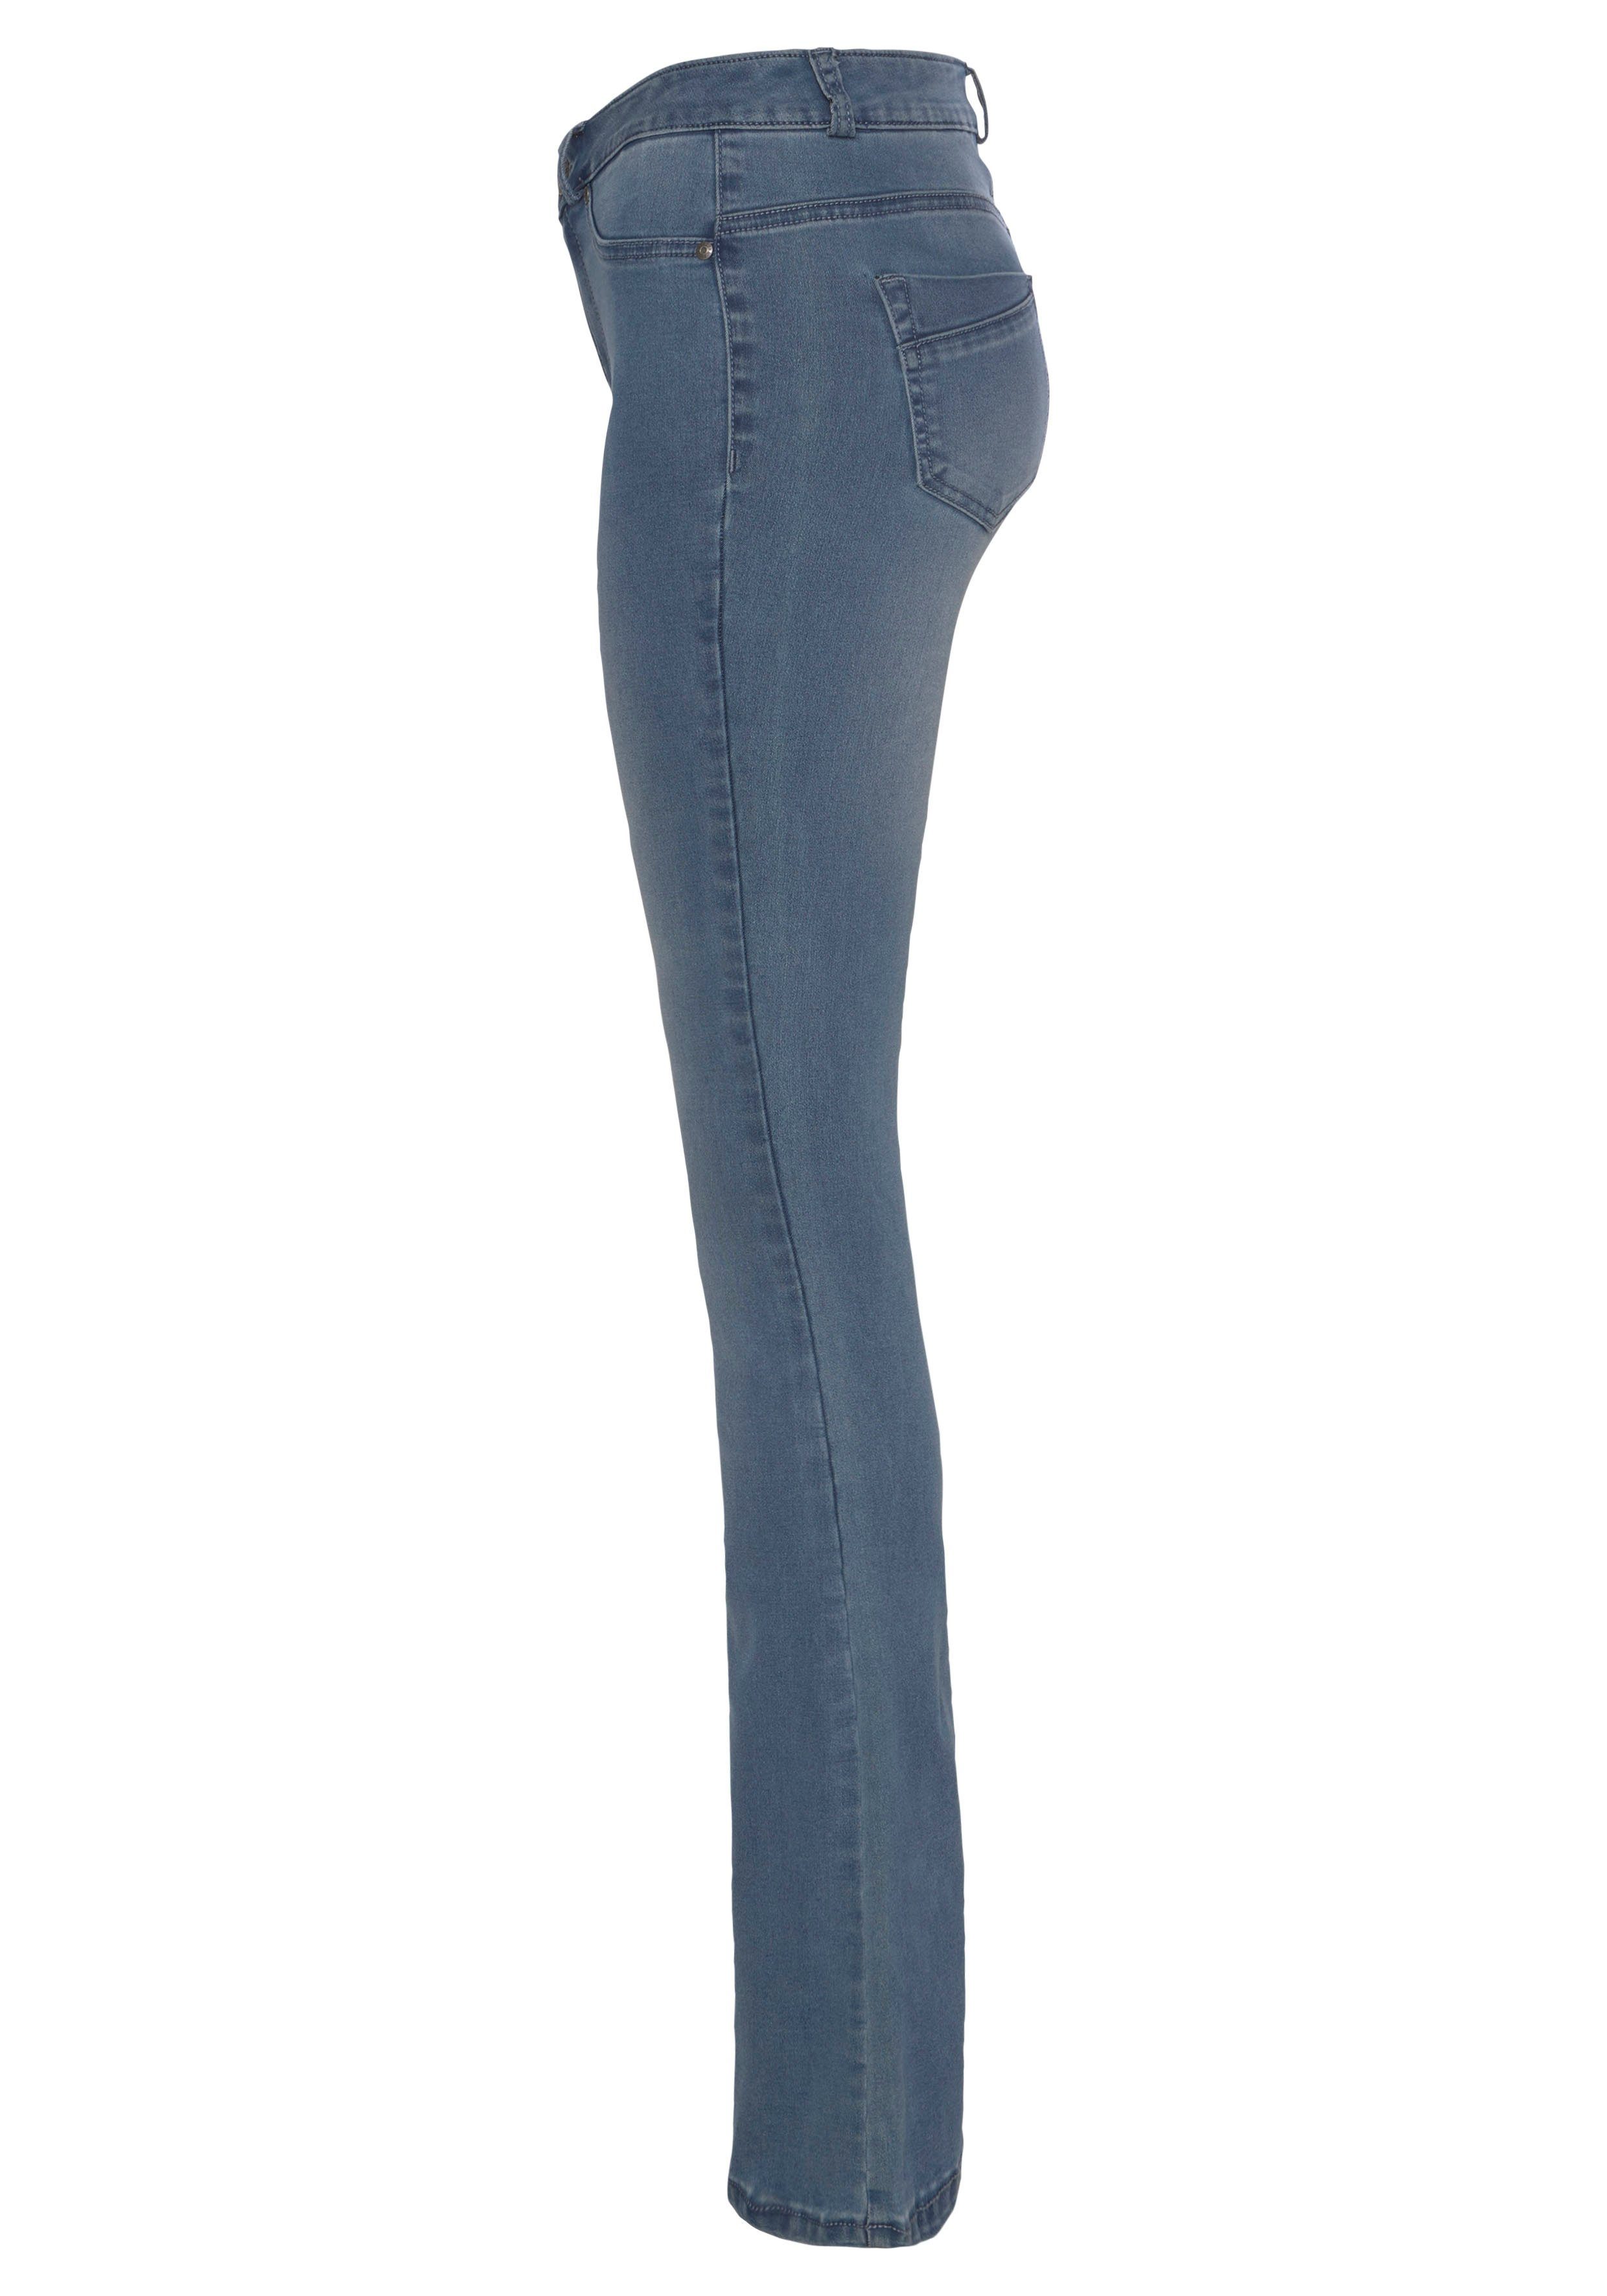 Arizona Bootcut-Jeans Stretch Ultra blue-used Waist Shapingnähten High mit